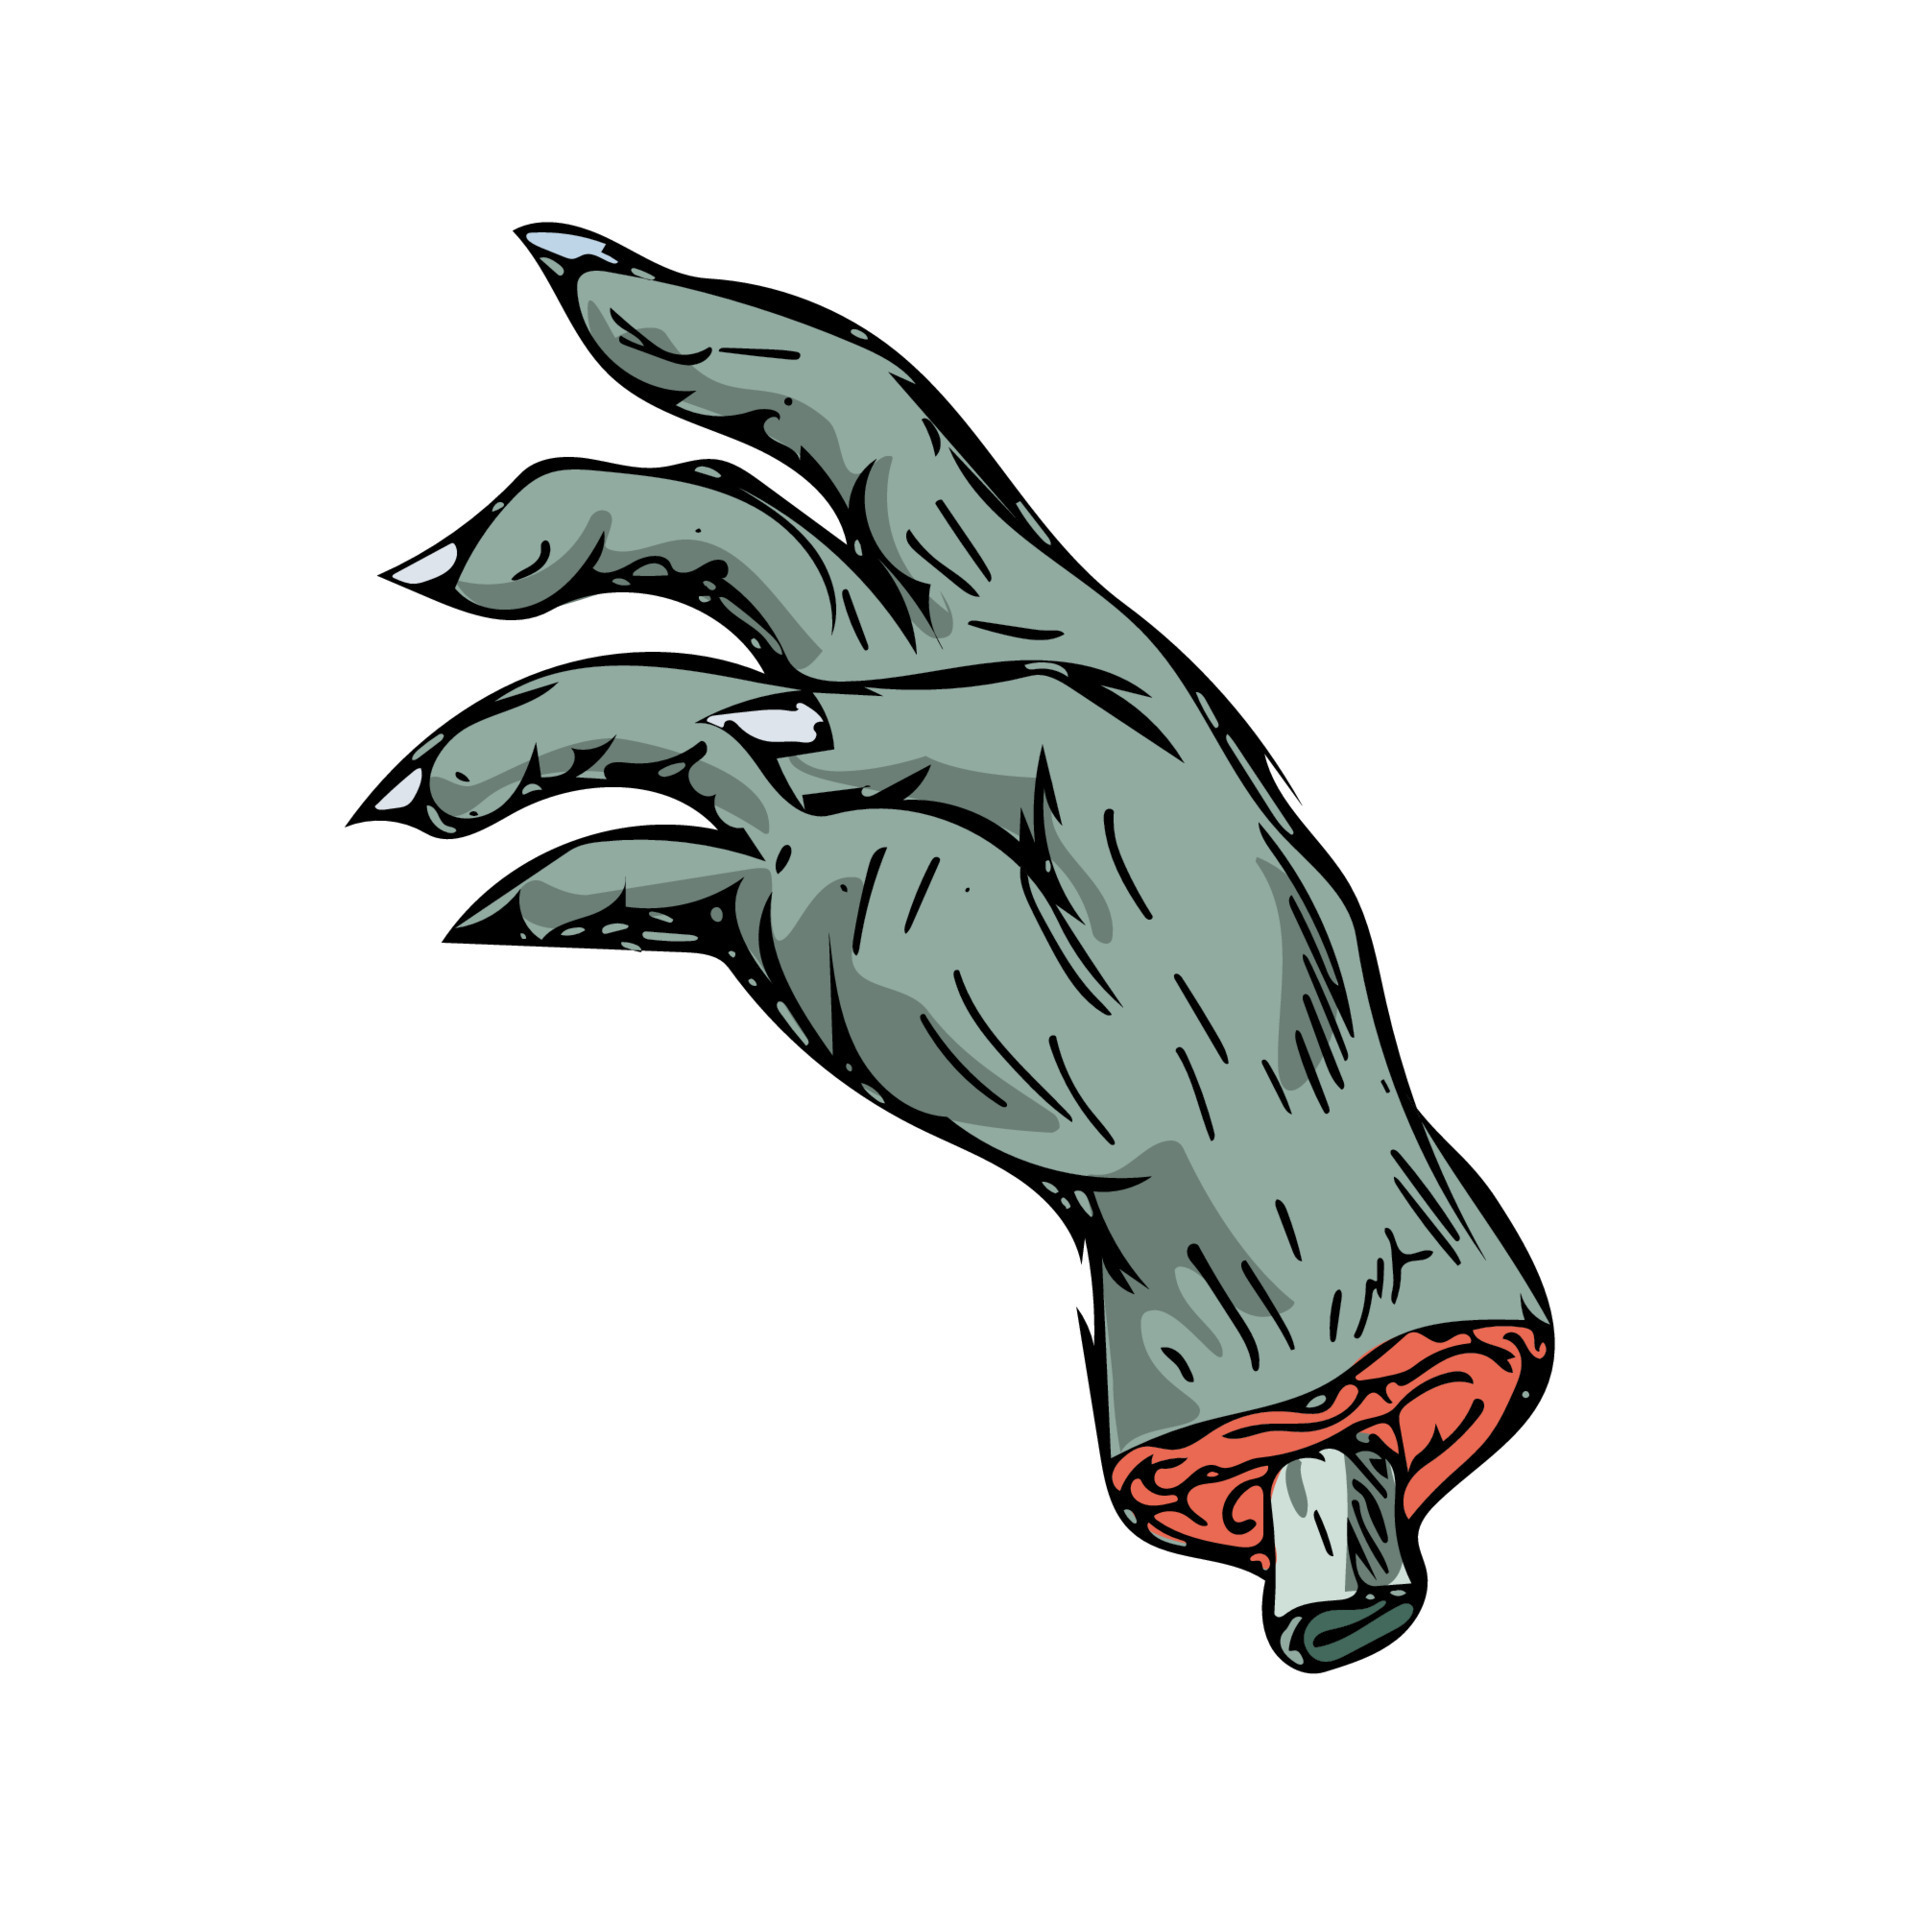 Zombie Hand with Many Small Holes, Deformed - Stock Illustration  [101717977] - PIXTA